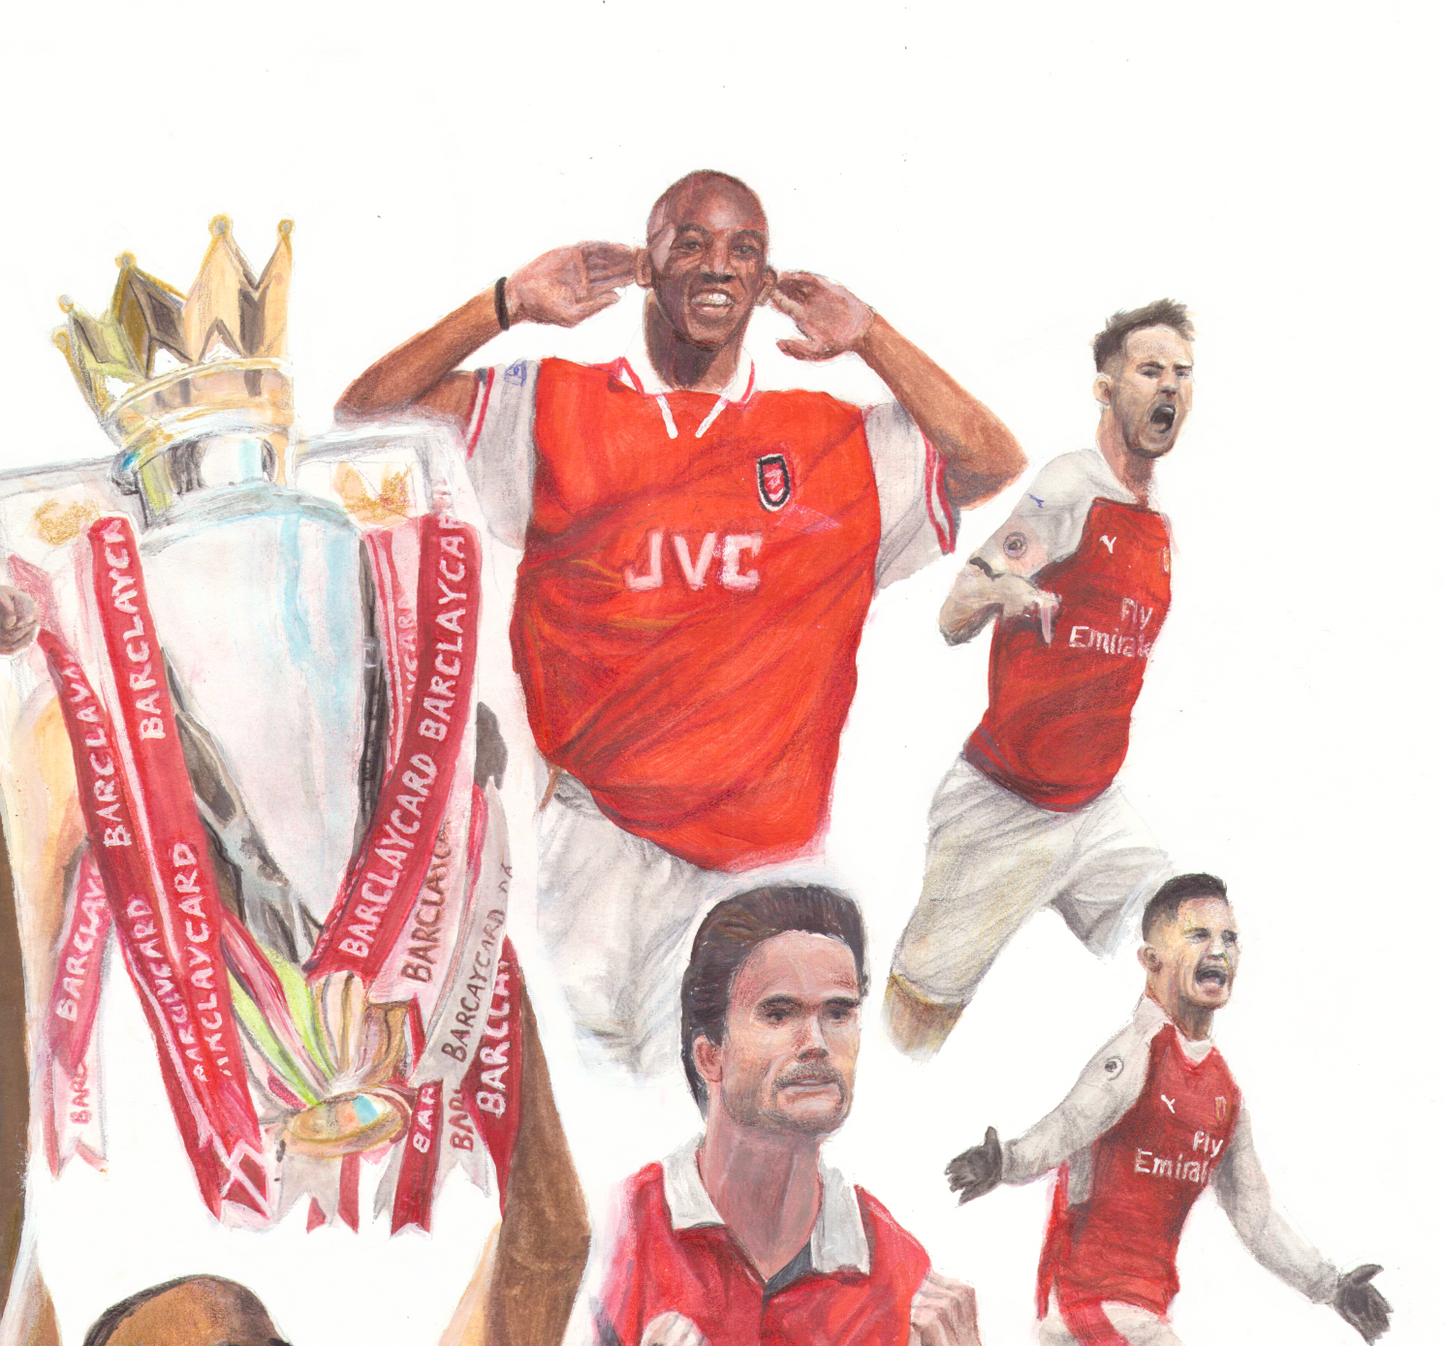 Arsenal Legends Mug